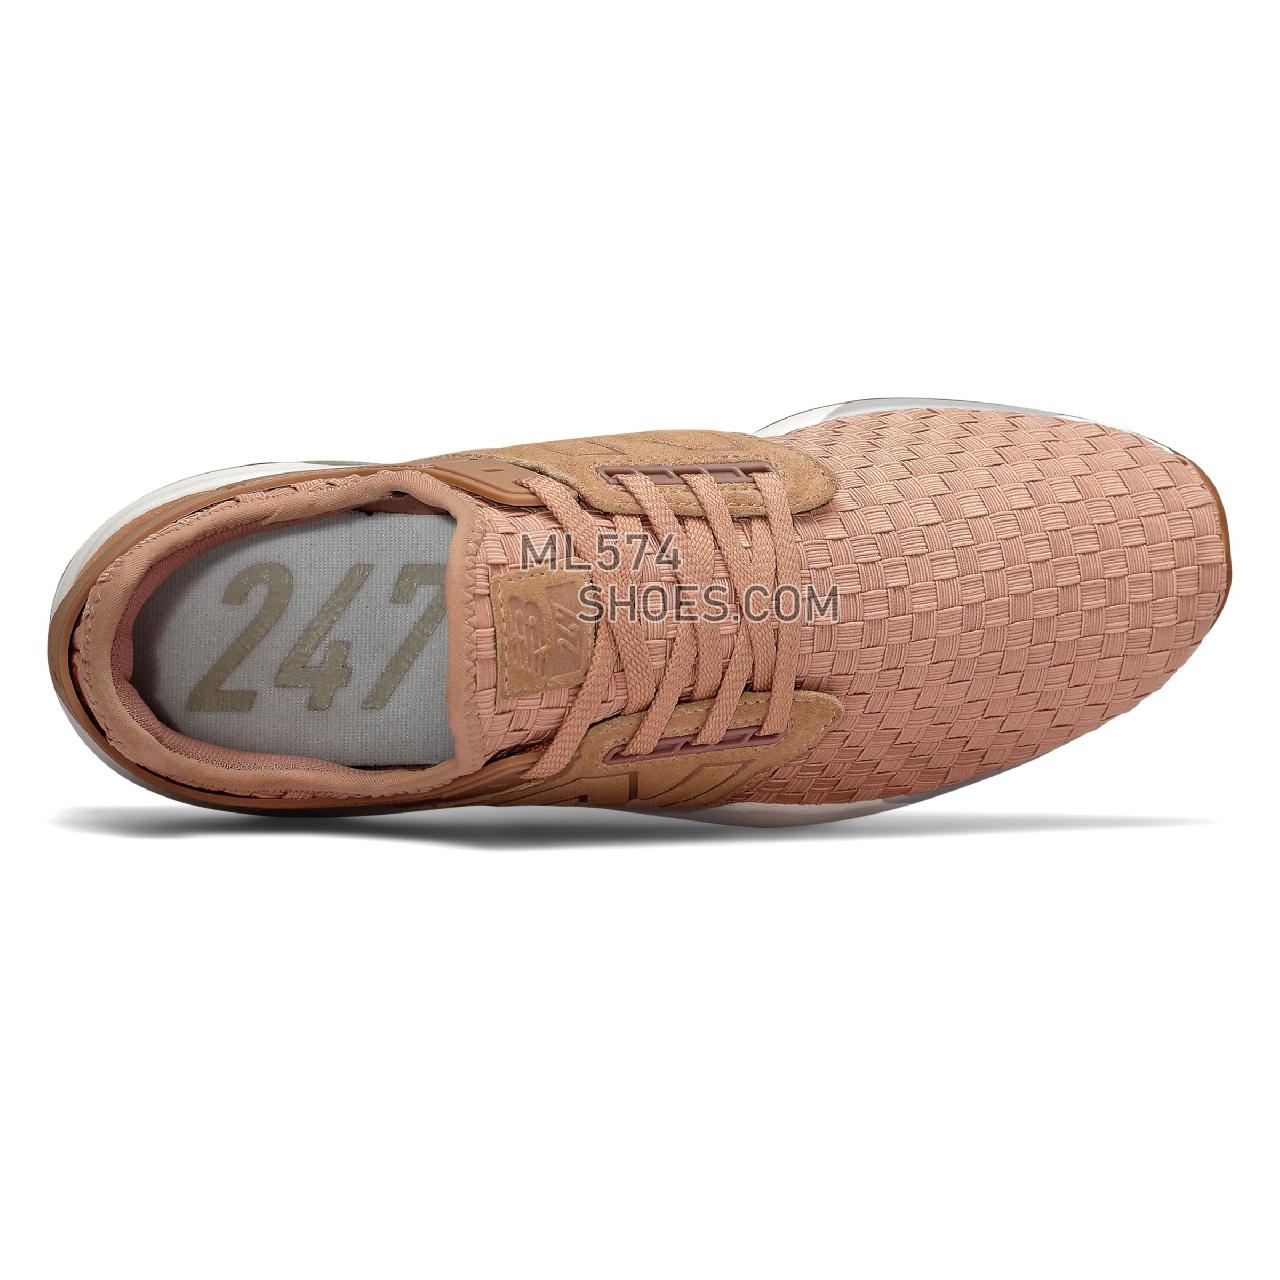 New Balance 247 - Men's Sport Style Sneakers - Desert Sand with Sea Salt - MS247WCM